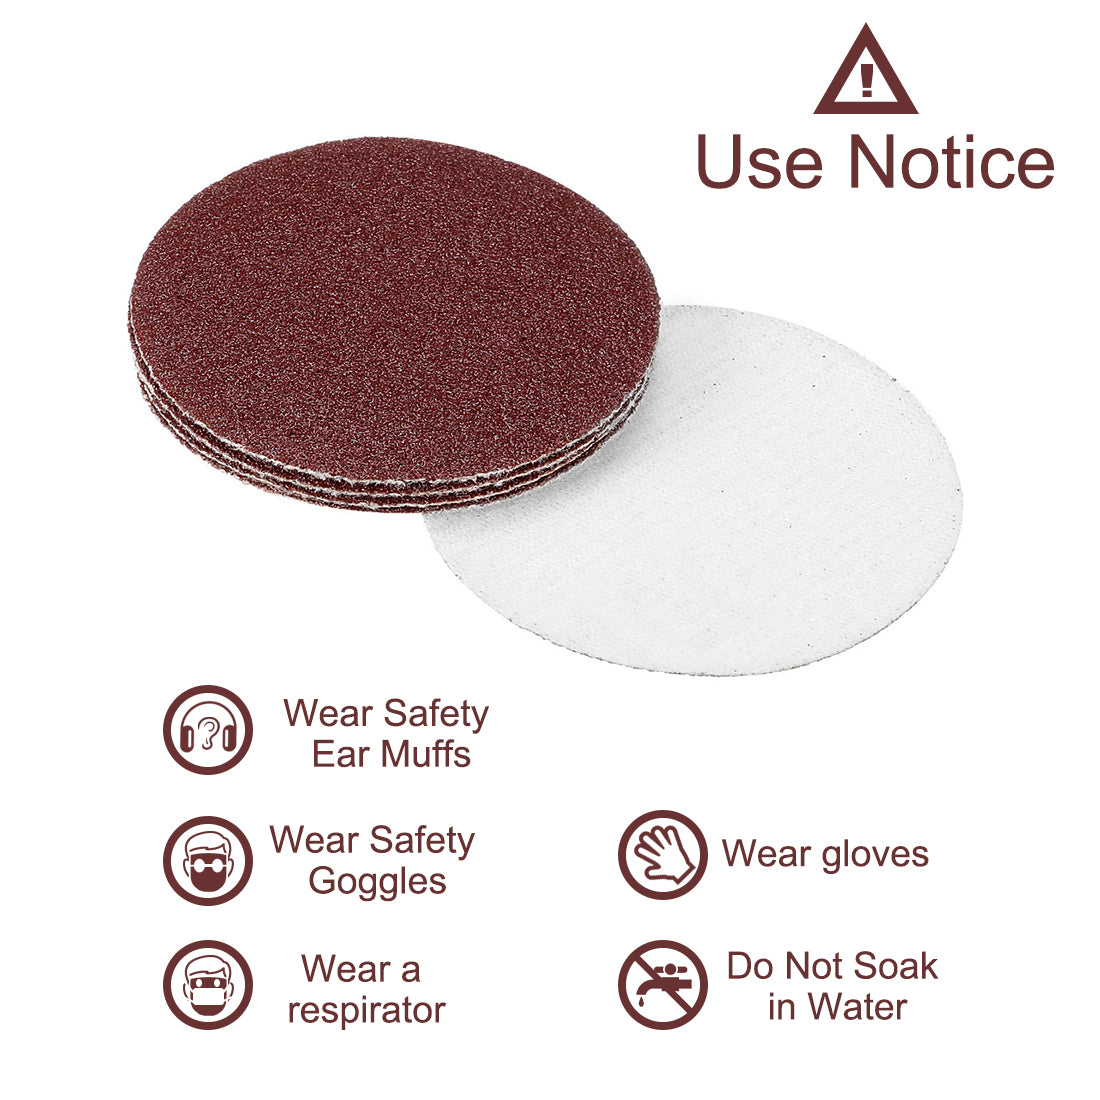 uxcell Uxcell 6-inch 240-Grits PSA Sanding Disc, Adhesive-Backed Sanding Sheets Aluminum Oxide Sandpaper for Random Orbital Sander 5pcs